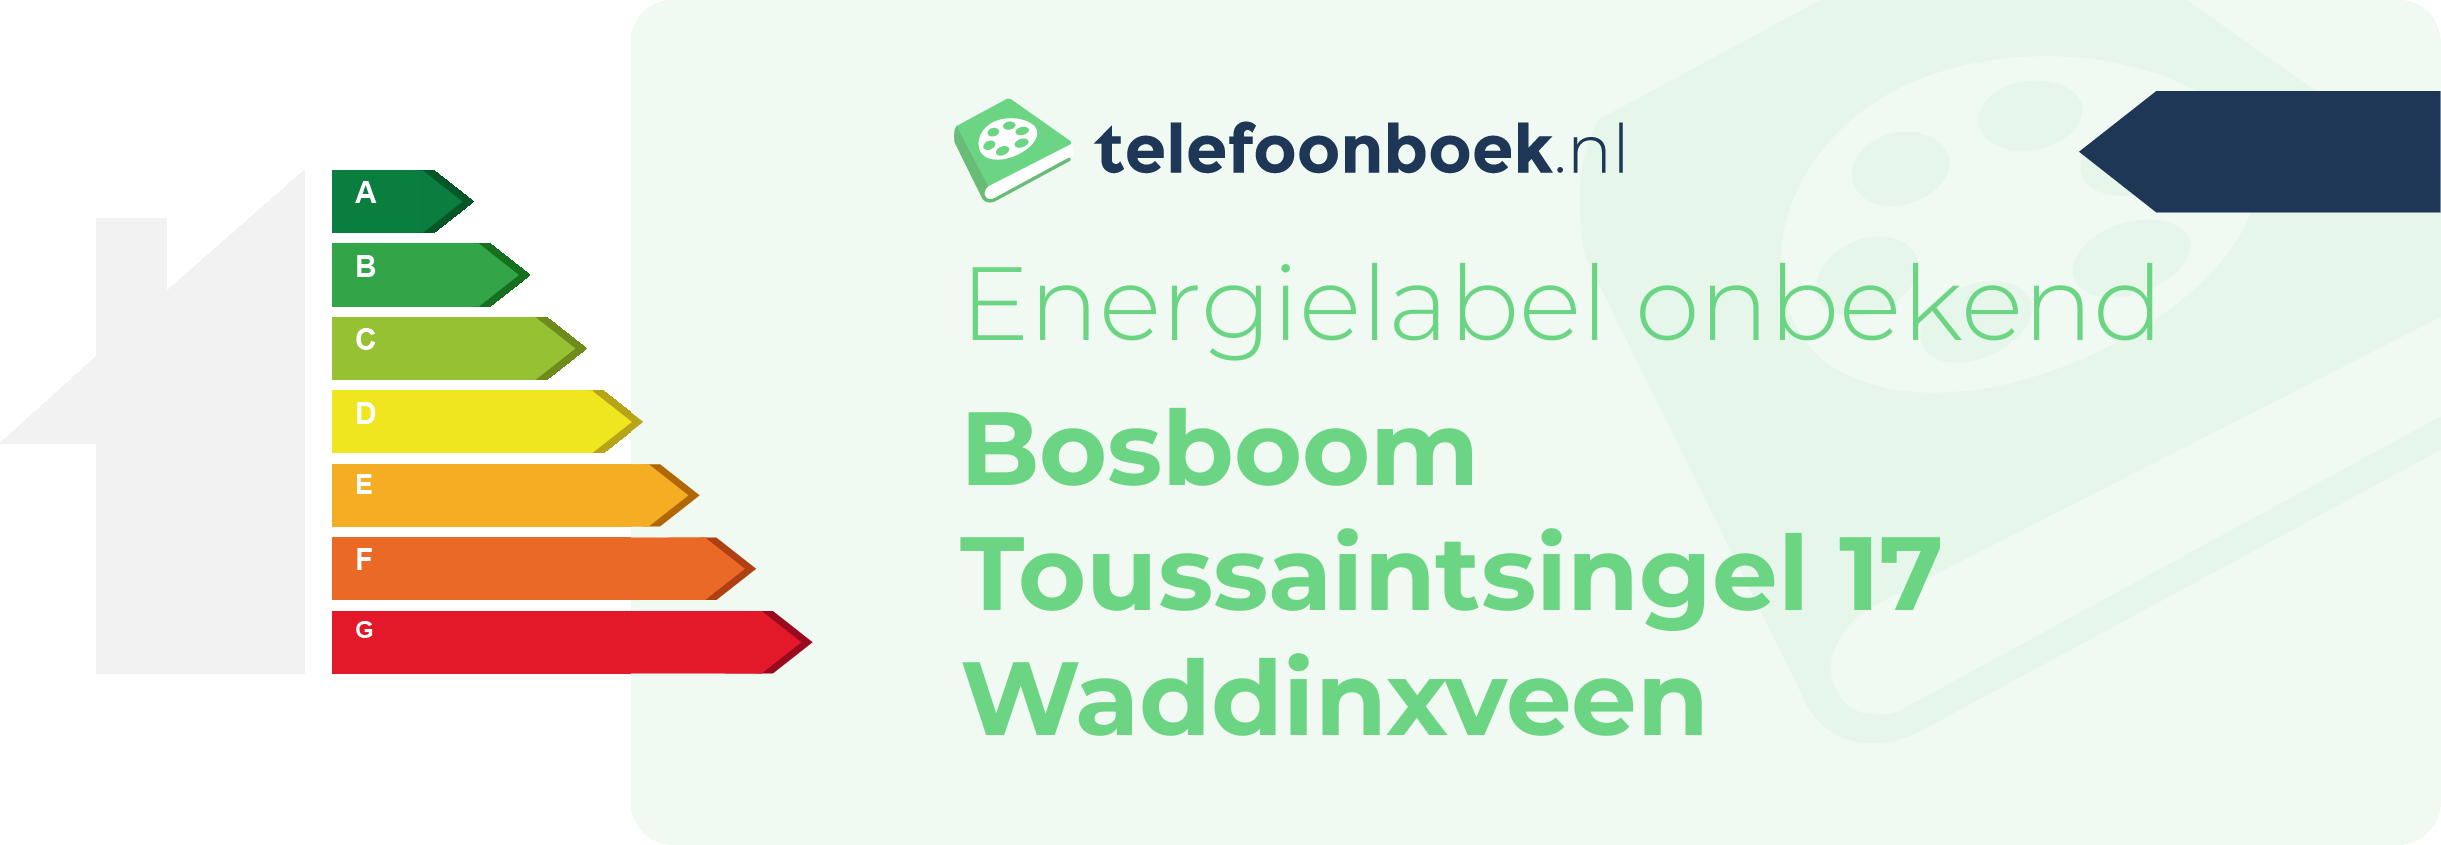 Energielabel Bosboom Toussaintsingel 17 Waddinxveen